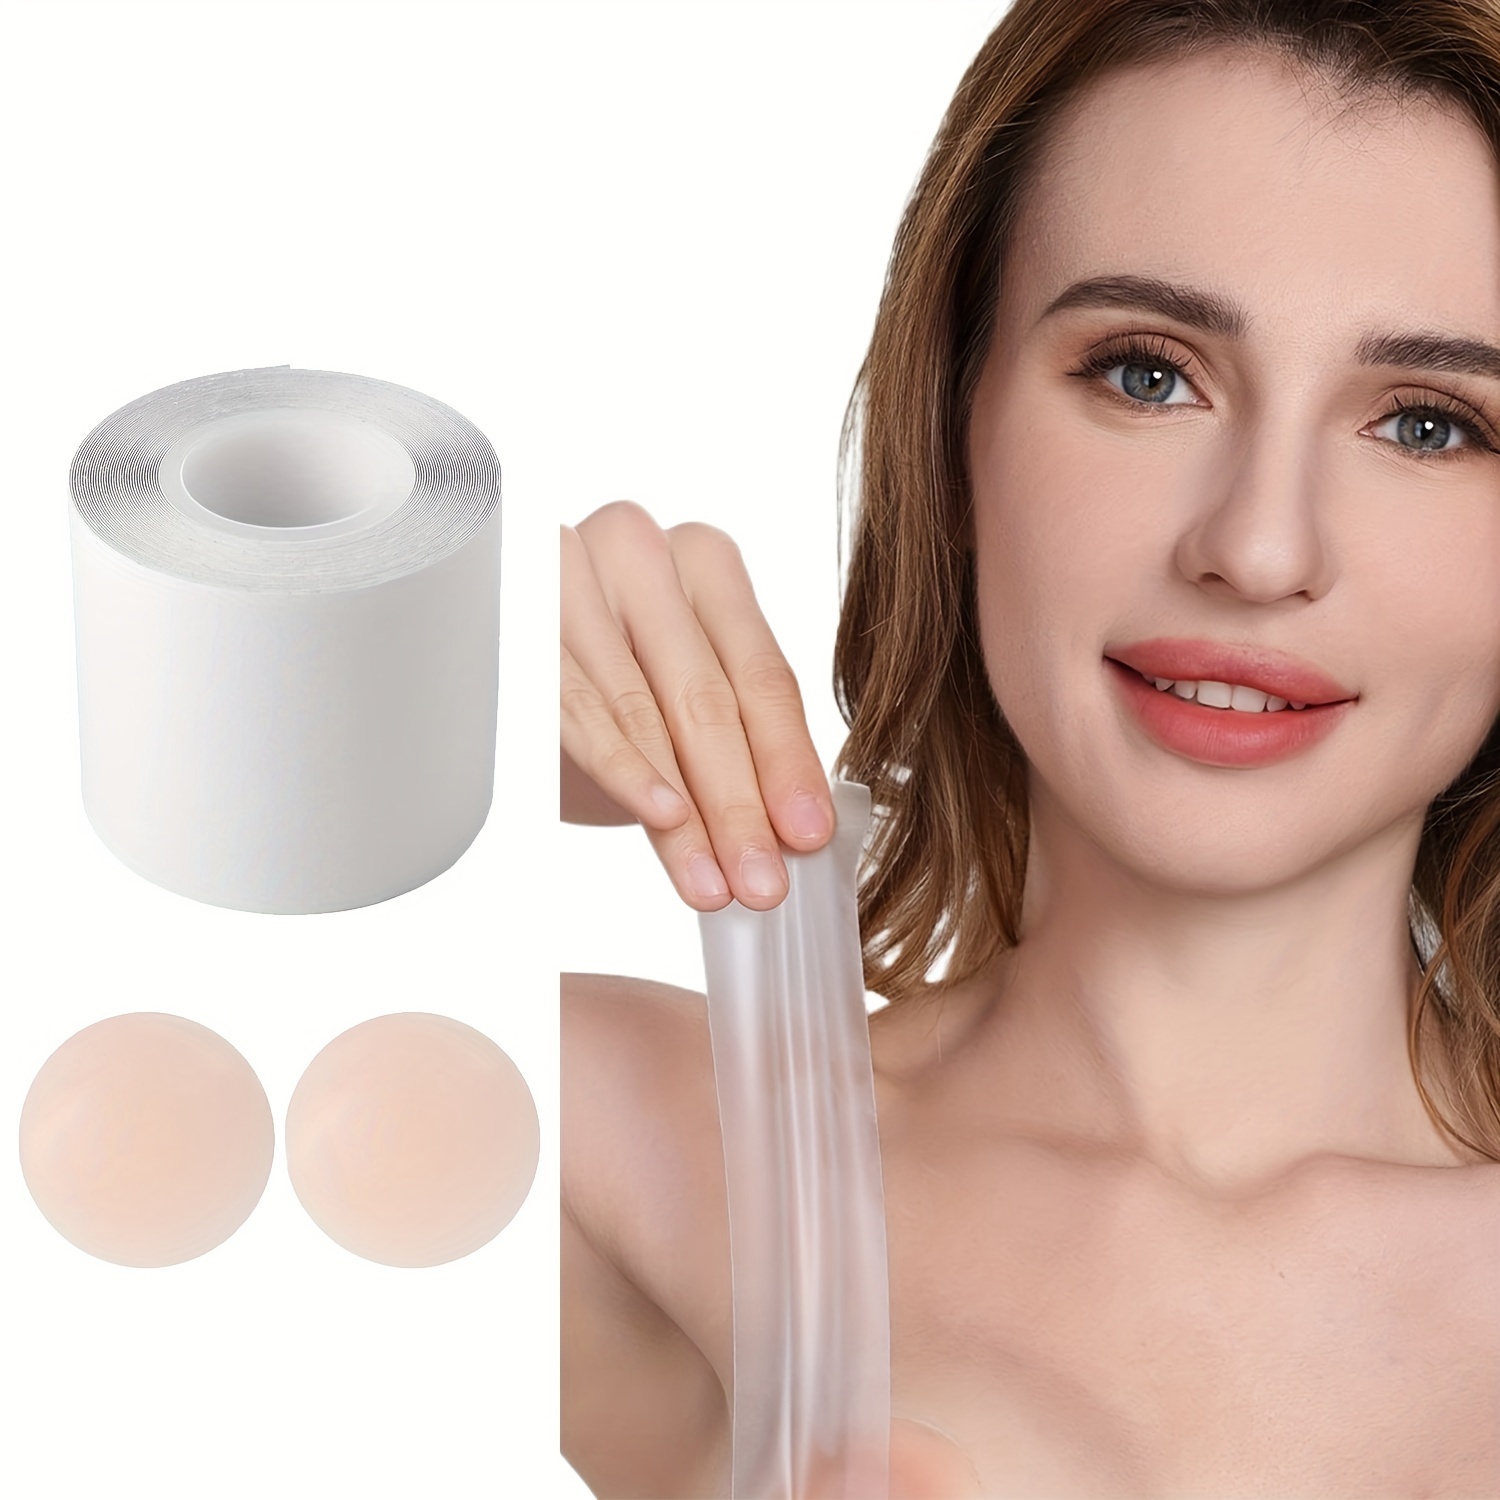 Silicone Breast Cup Bra, Adhesive Silicone Tape